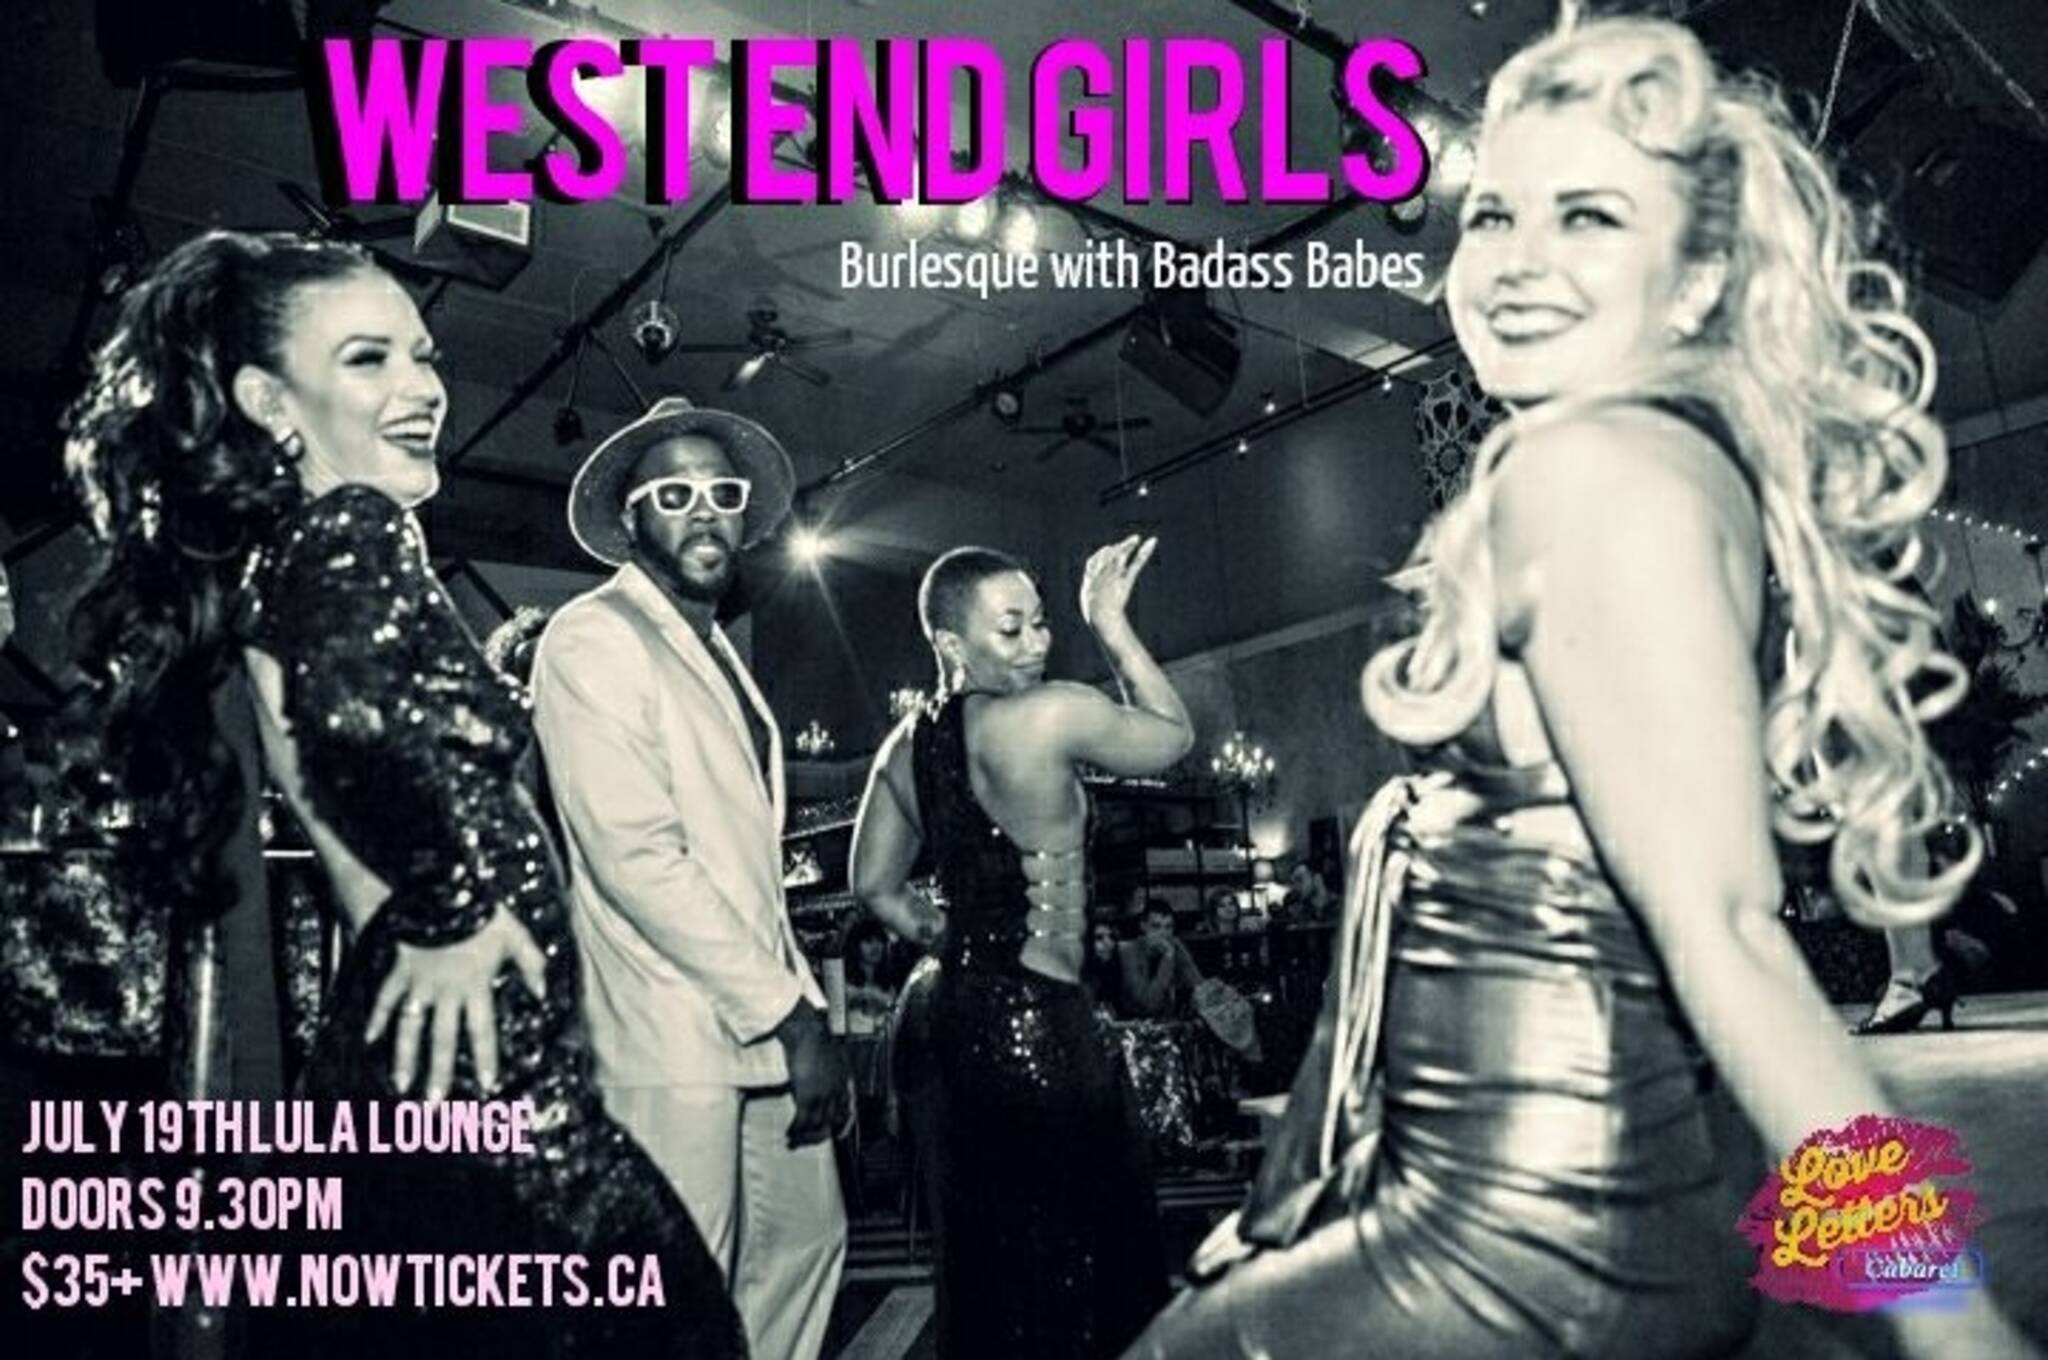 West End Girls Burlesque With Badass Babes